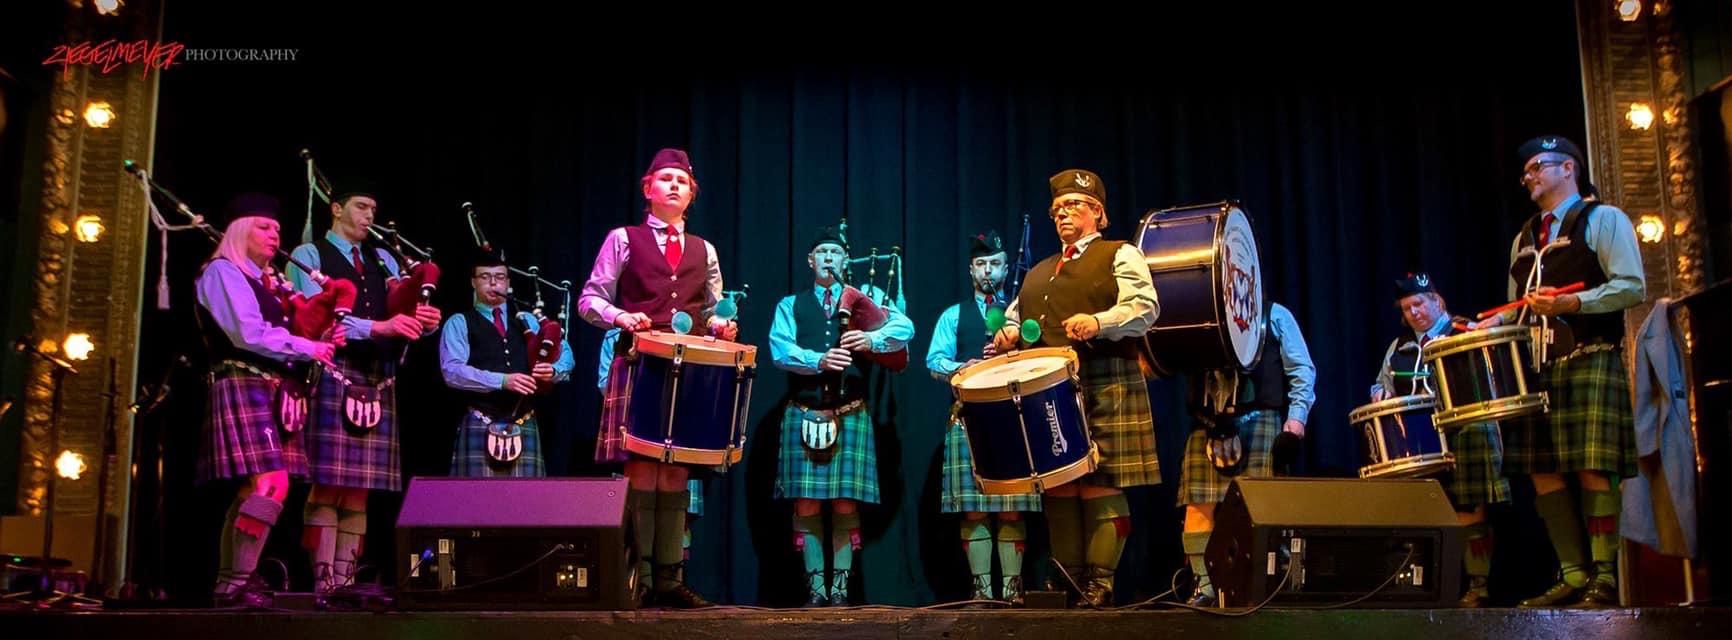 Spring Tartan Ceilidh: A Scottish Pipe Band Show